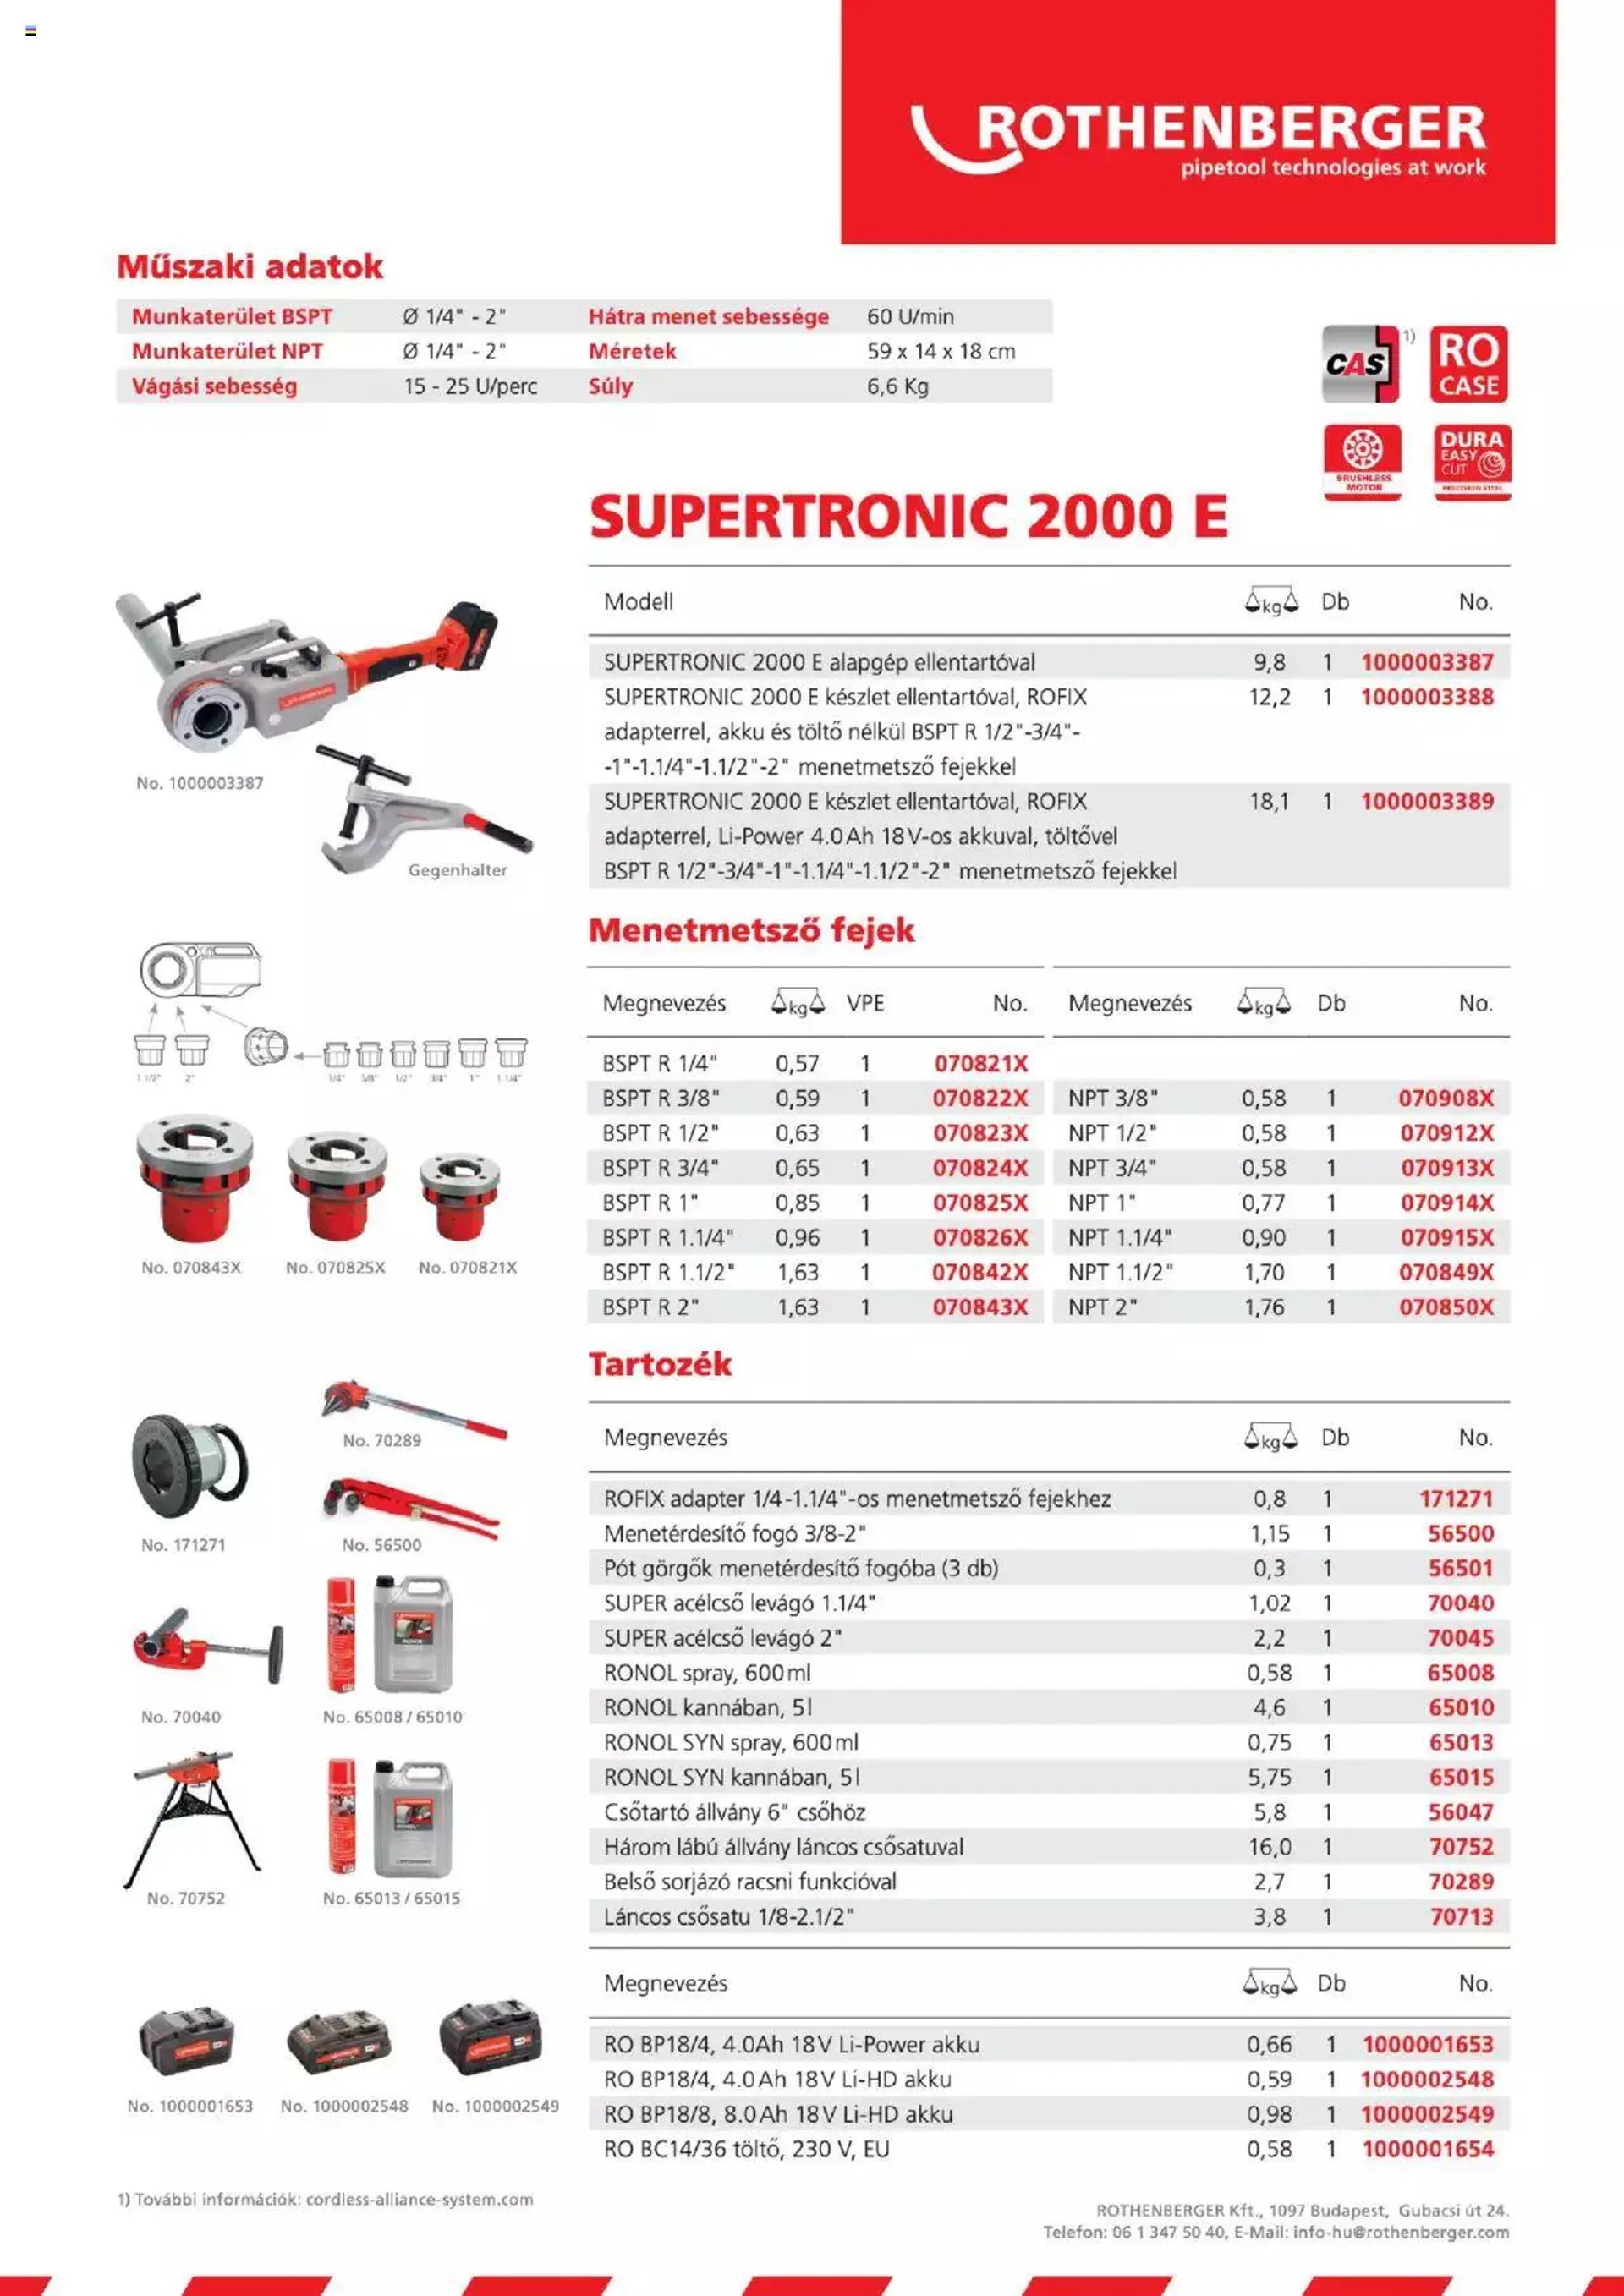 Rothenberger - Supertronic 2000 - 1